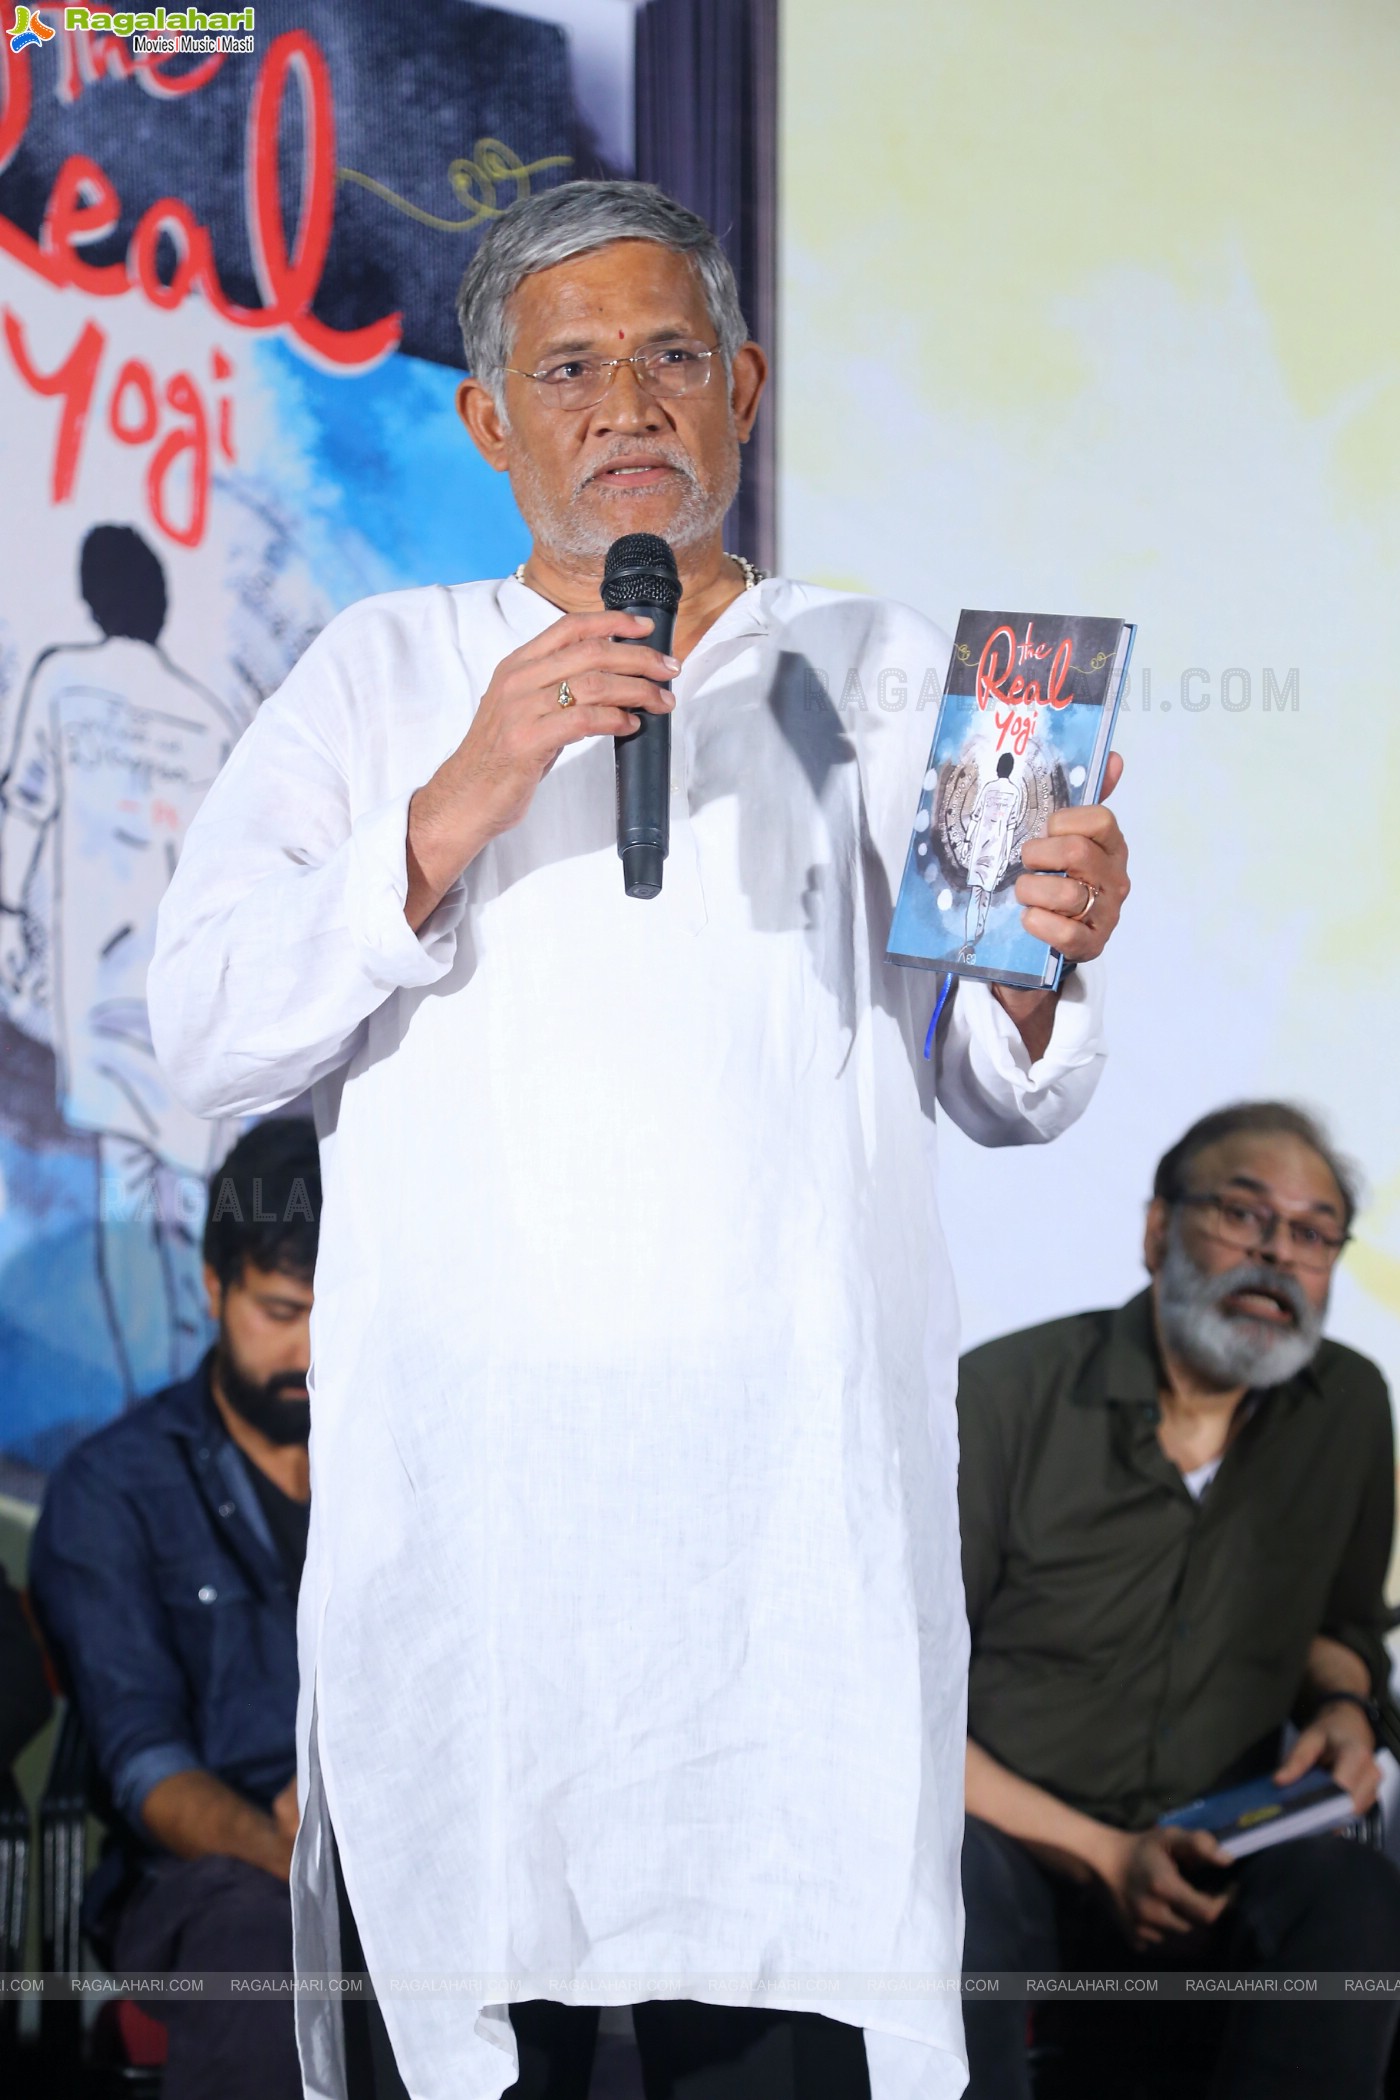 Pawan Kalyan's The Real Yogi Book Launch by Nagababu